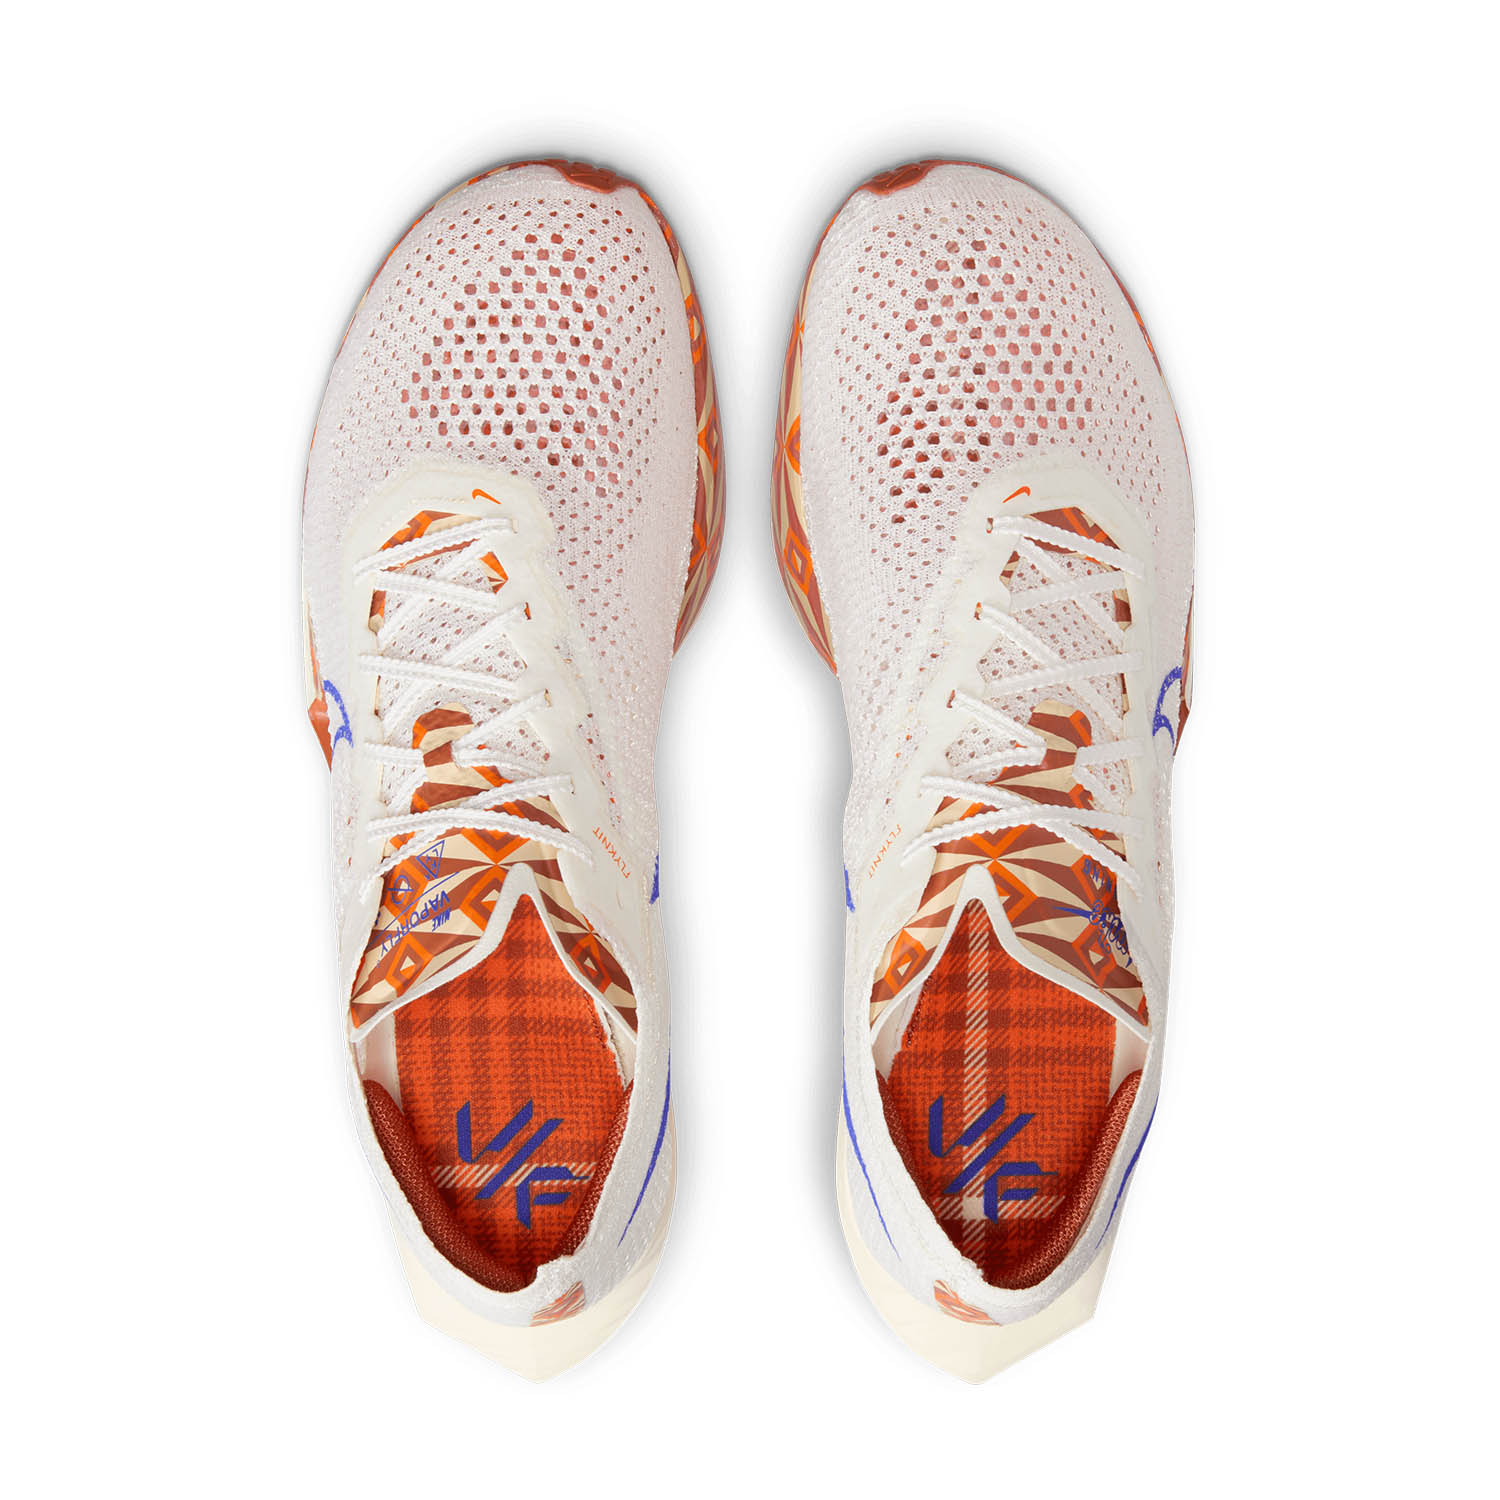 Nike ZoomX Vaporfly Next% 3 Premium - Sail/Hyper Royal/Safety Orange